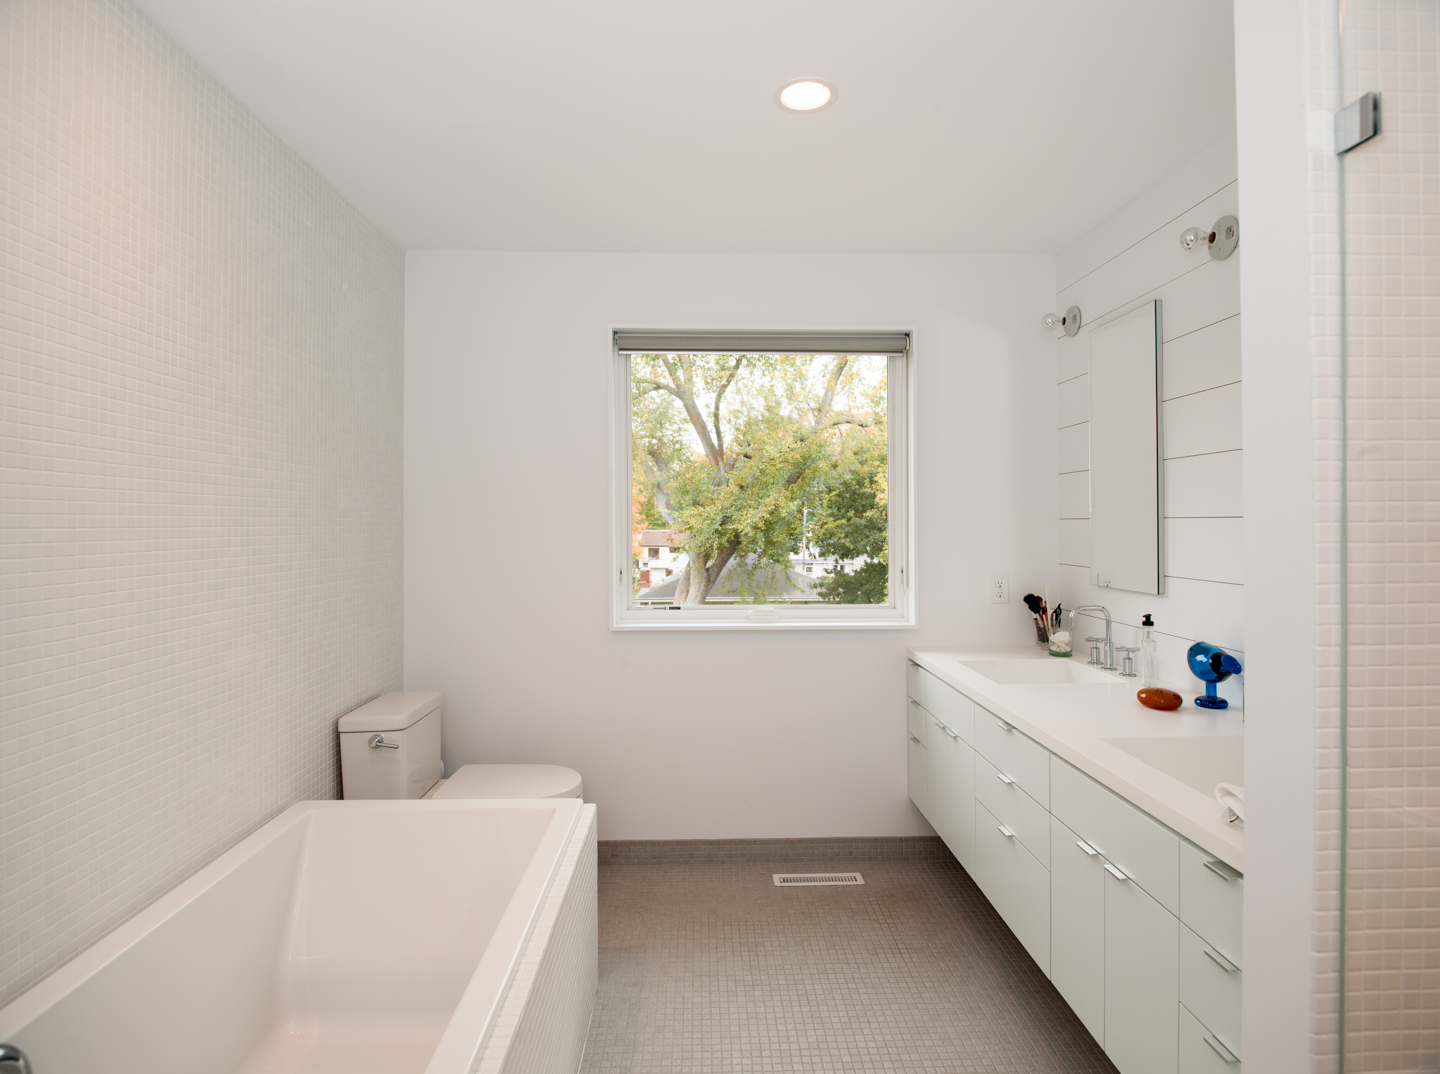 Modern bathroom renovation with tiled walls and custom floating vanity